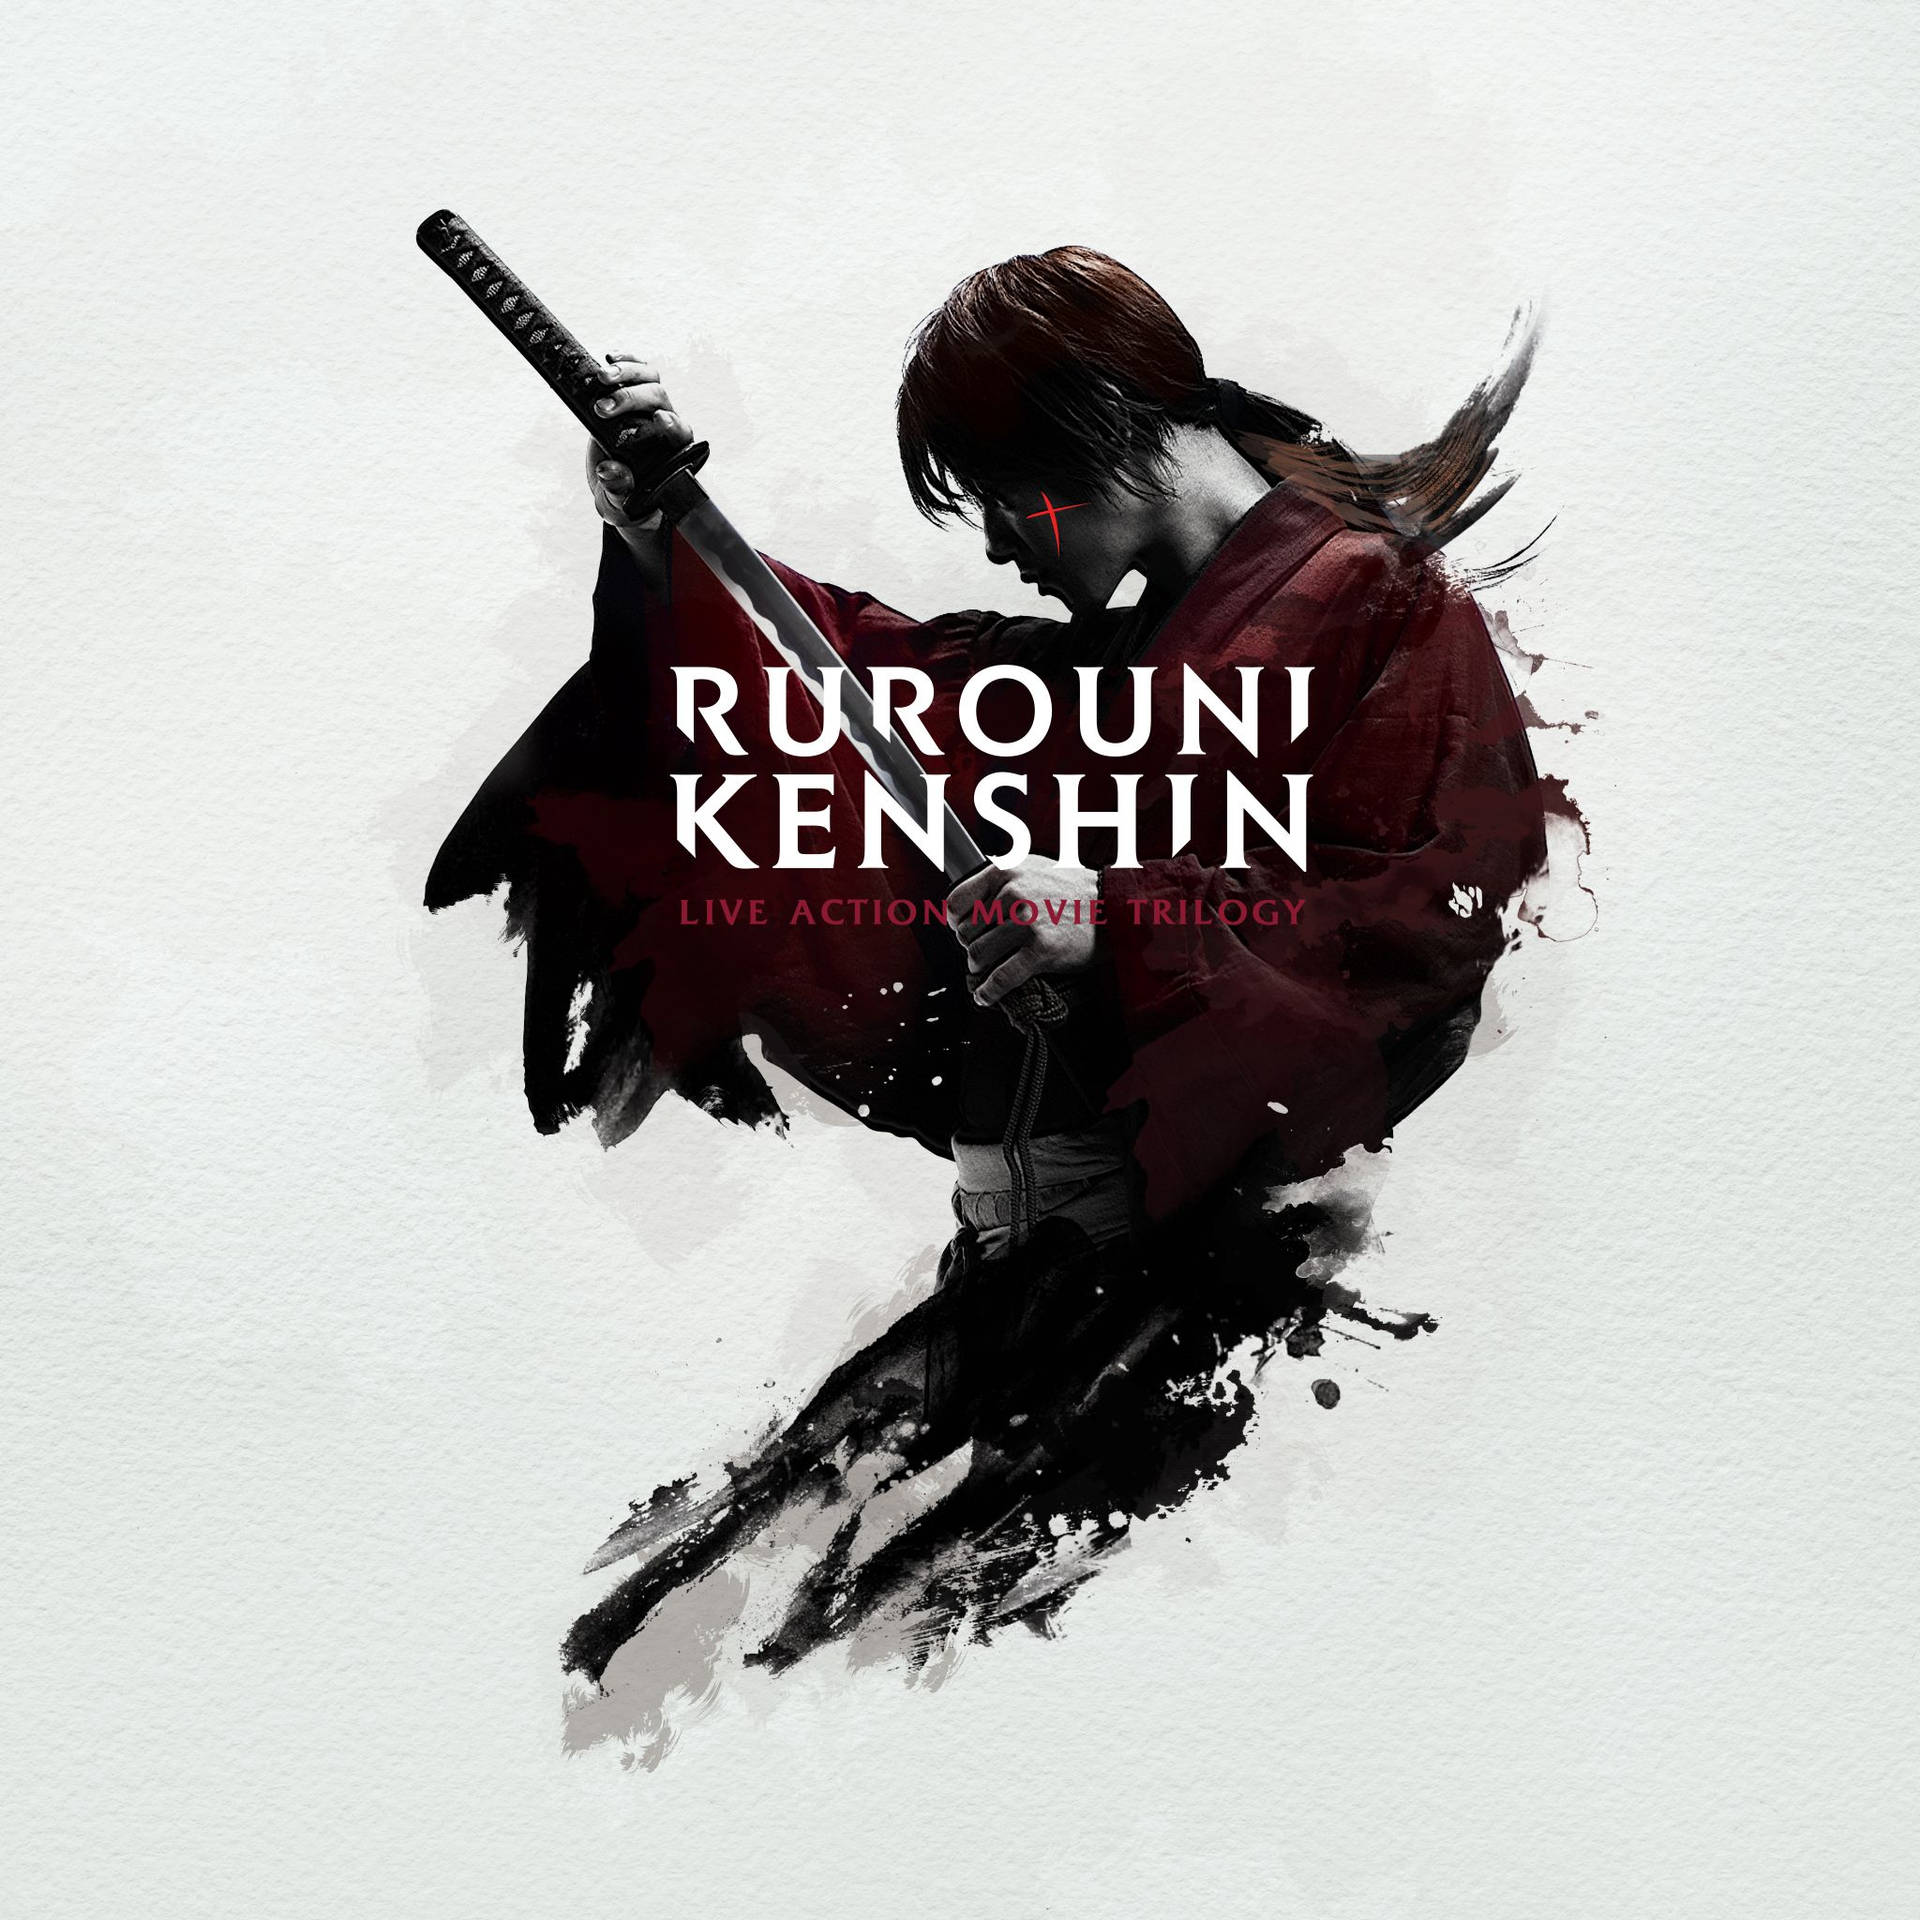 Wallpaper  anime Rurouni Kenshin romance flower 1920x1080 px 1920x1080   CoolWallpapers  716985  HD Wallpapers  WallHere